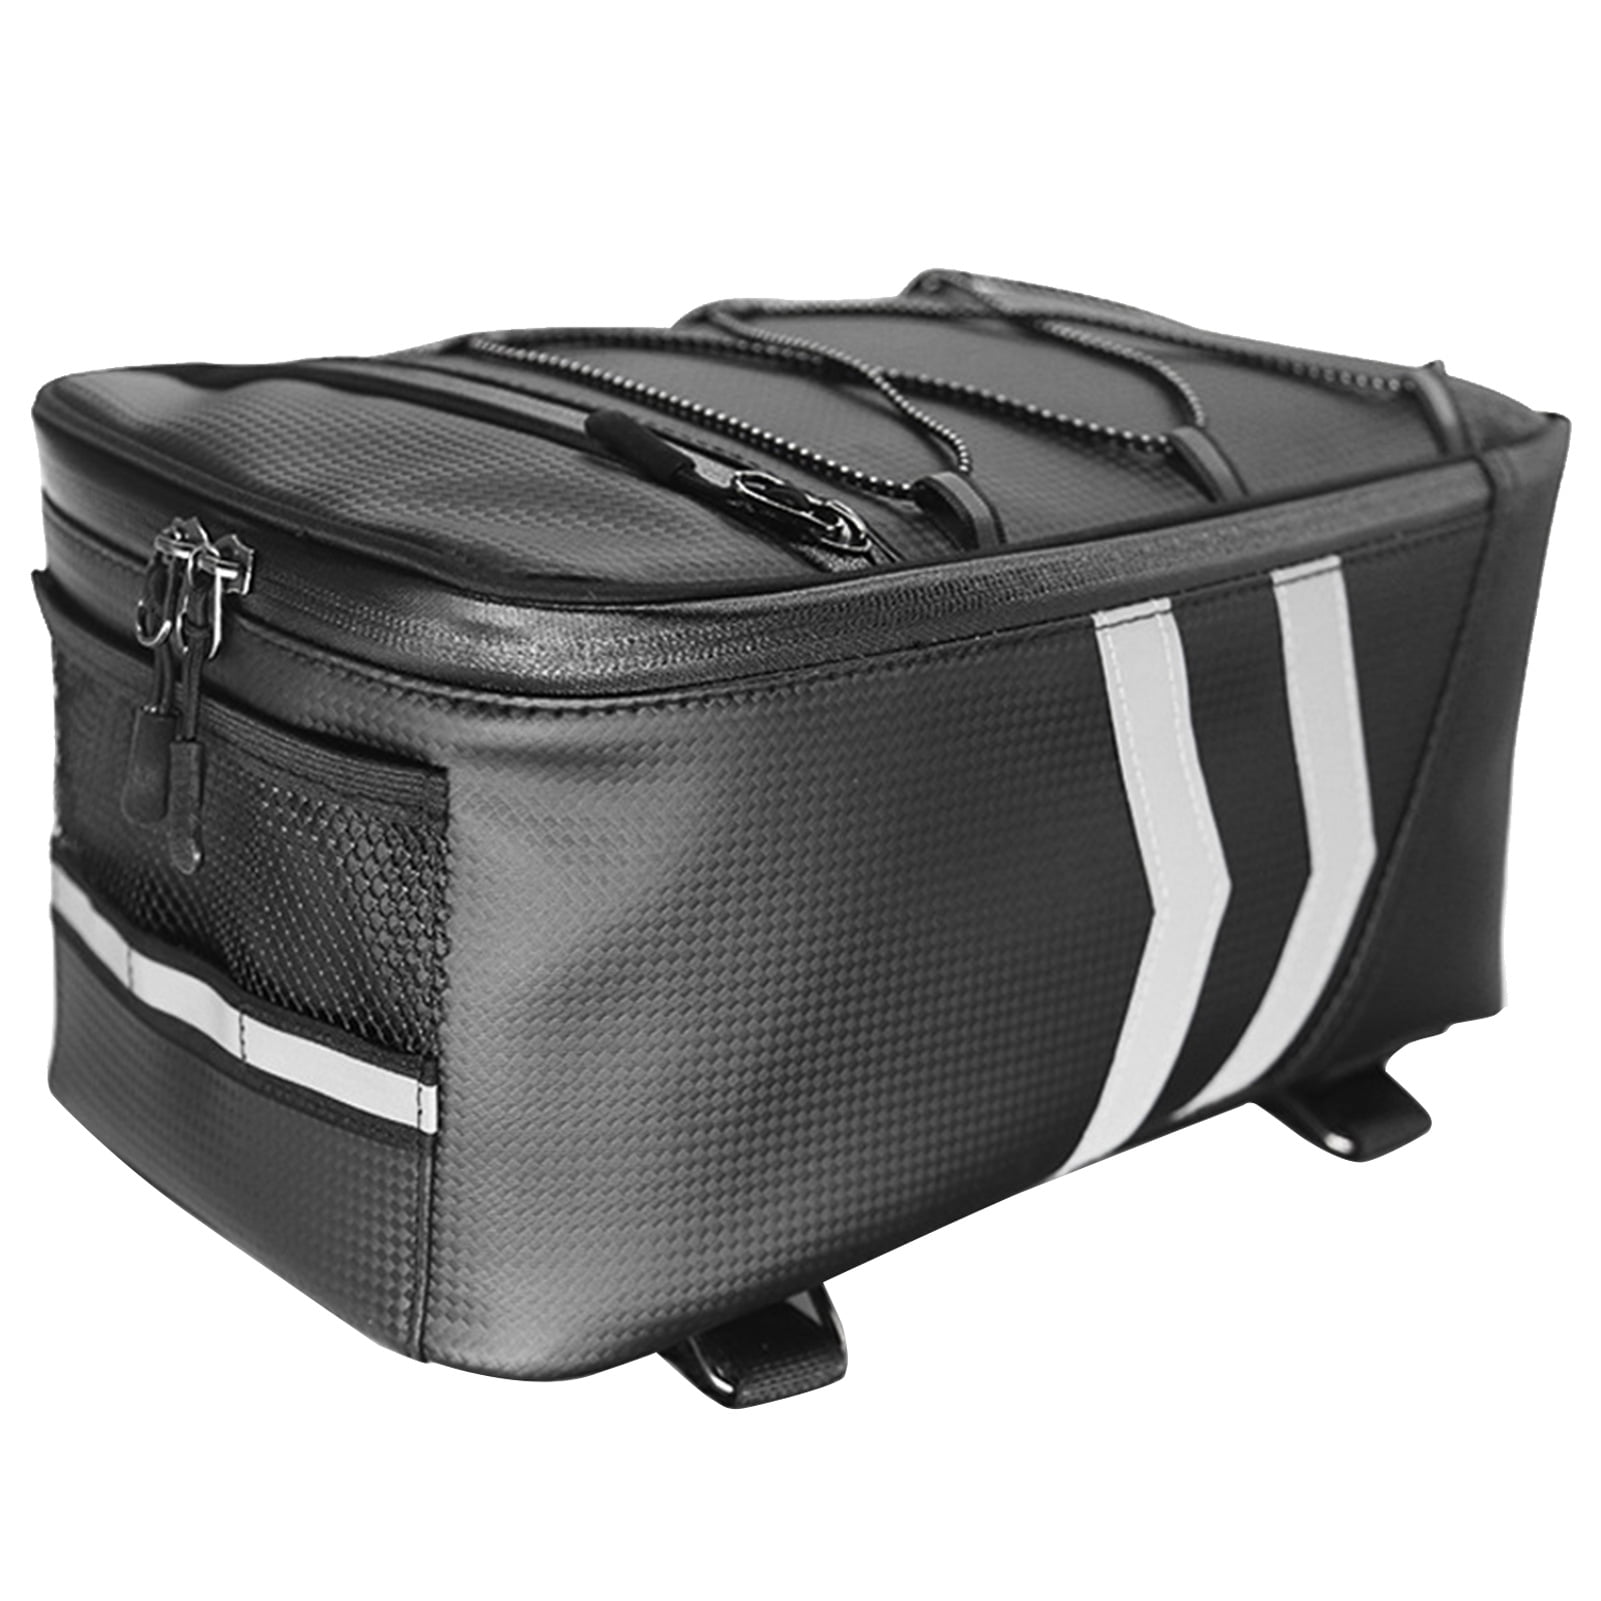 Details about    Bike Motorcycle Rear Rack Bag Tail Seat Trunk Pack Storage Handbag Pannier 